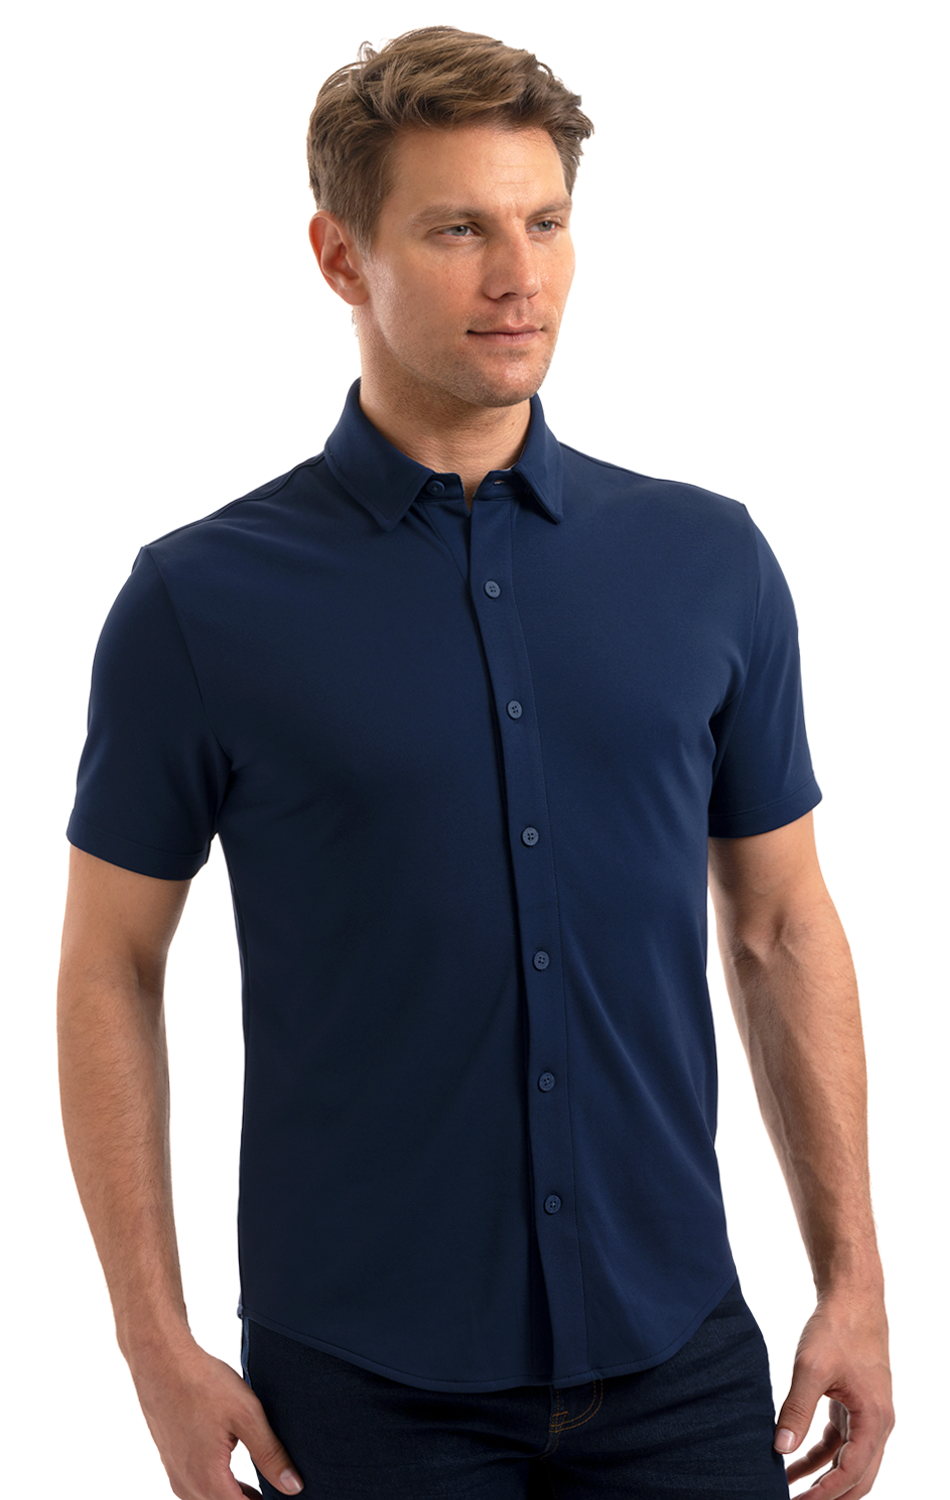 Men New Shirt High-end Sense Business Versatile Plaid Slim Fashion Casual  Party Can Be Worn Outer Base Shirt